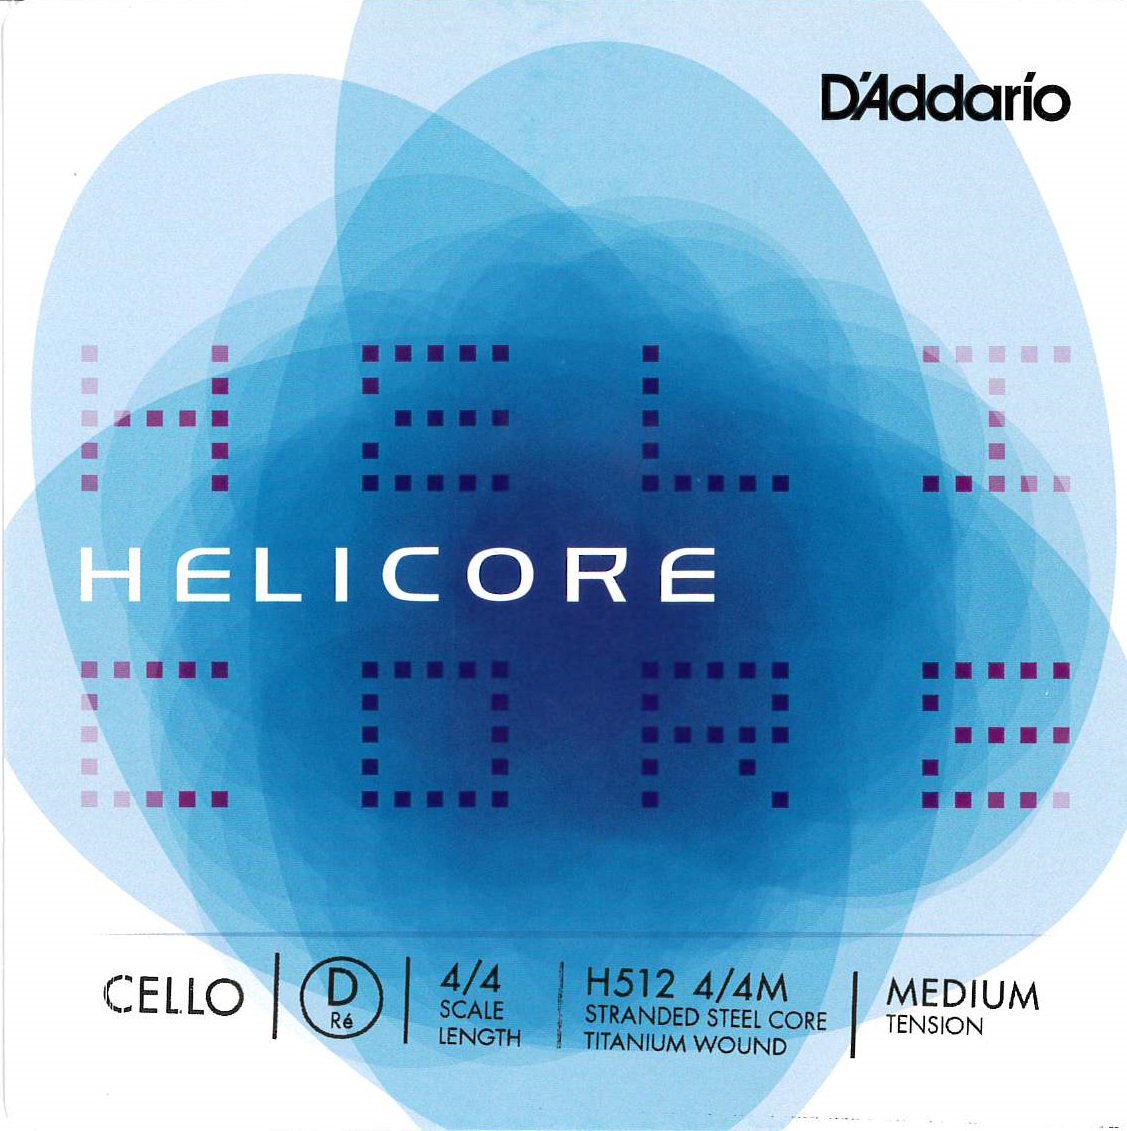 Helicore】ﾍﾘｺｱ-D'addario- - I Love Strings. | 国内最大級クラシック